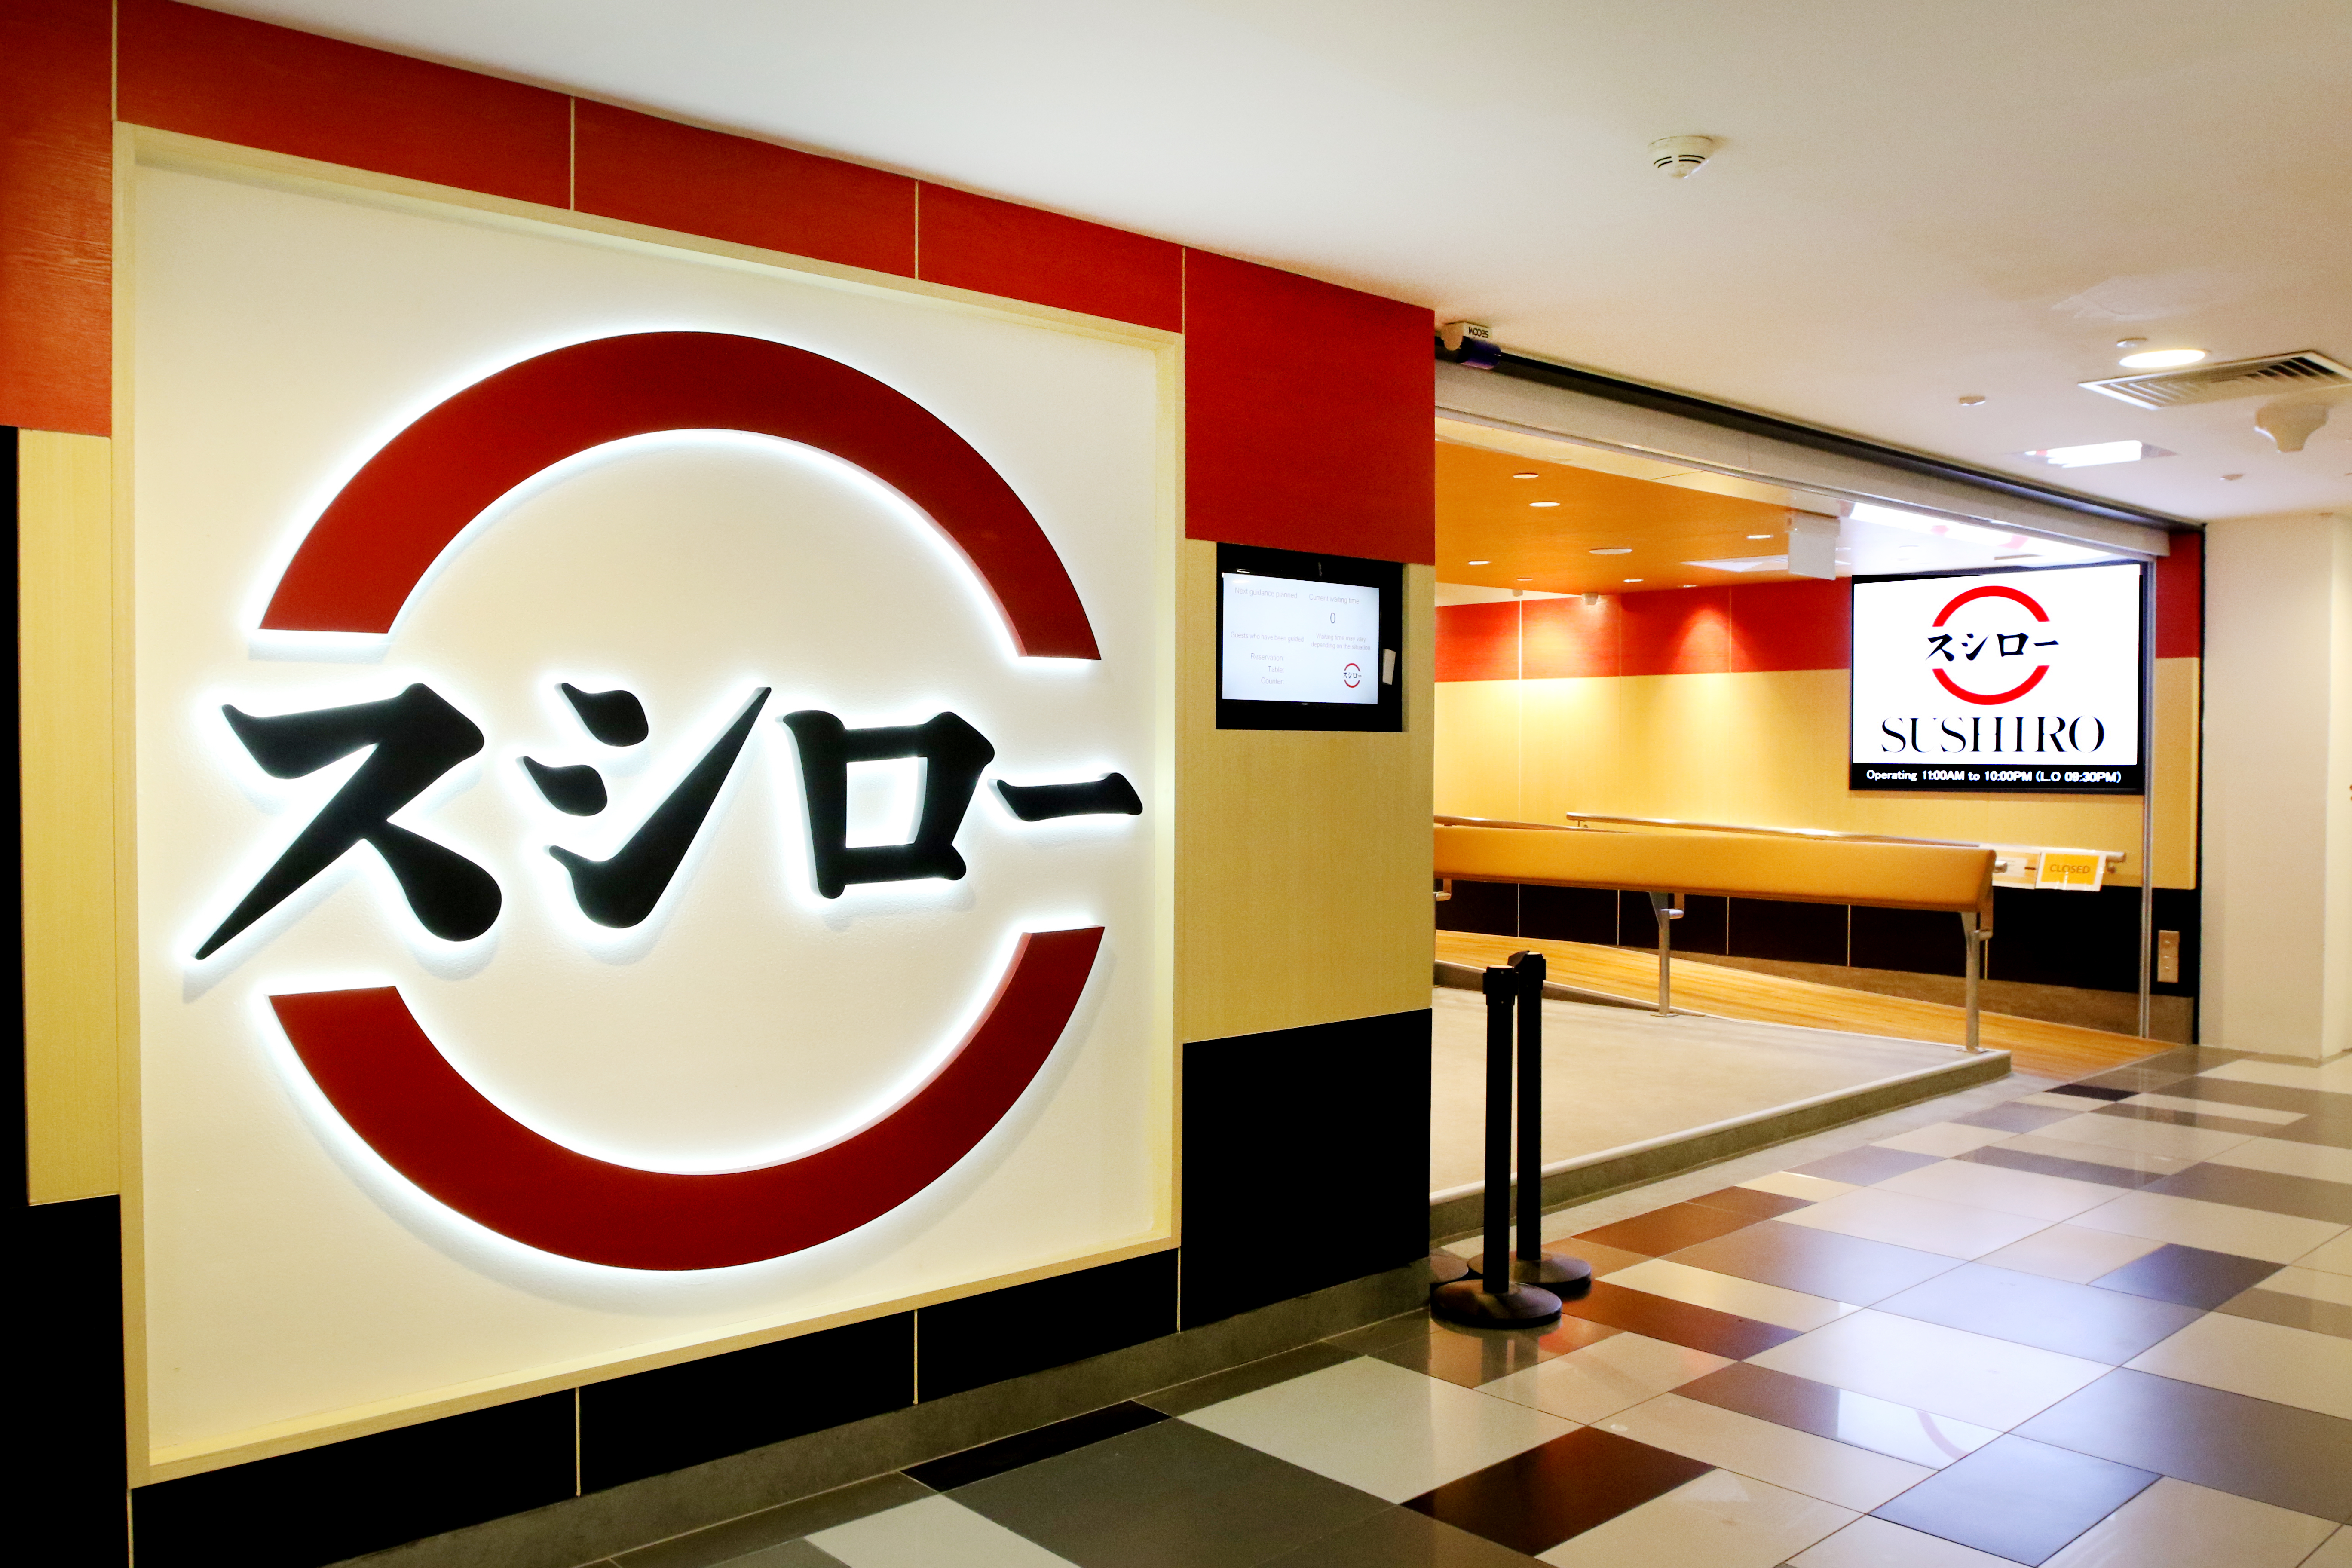 Japan’s number 1 kaiten sushi chain, Sushiro, is opening in Singapore on 19 Aug, offers S$2.20 Fatty Tuna sushi & $4.80 Sea Urchin sushi - 3